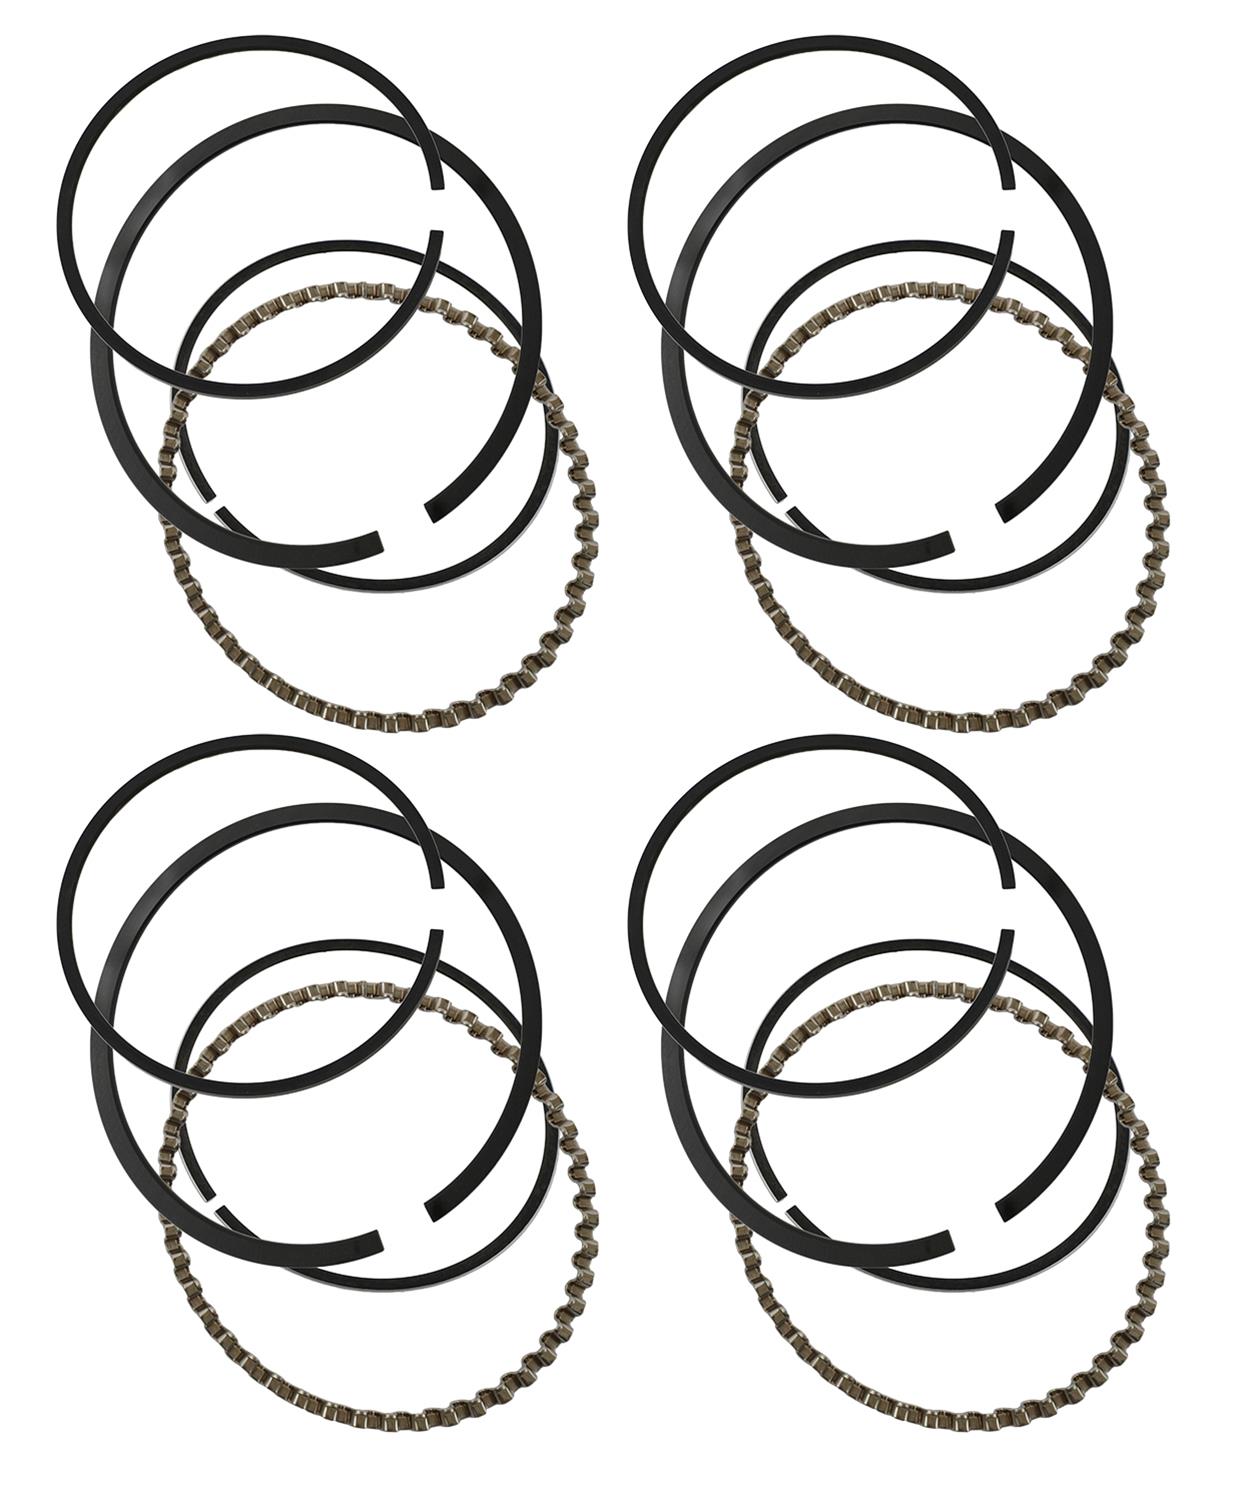 Hastings 9524030 4-Cylinder Piston Ring Set 